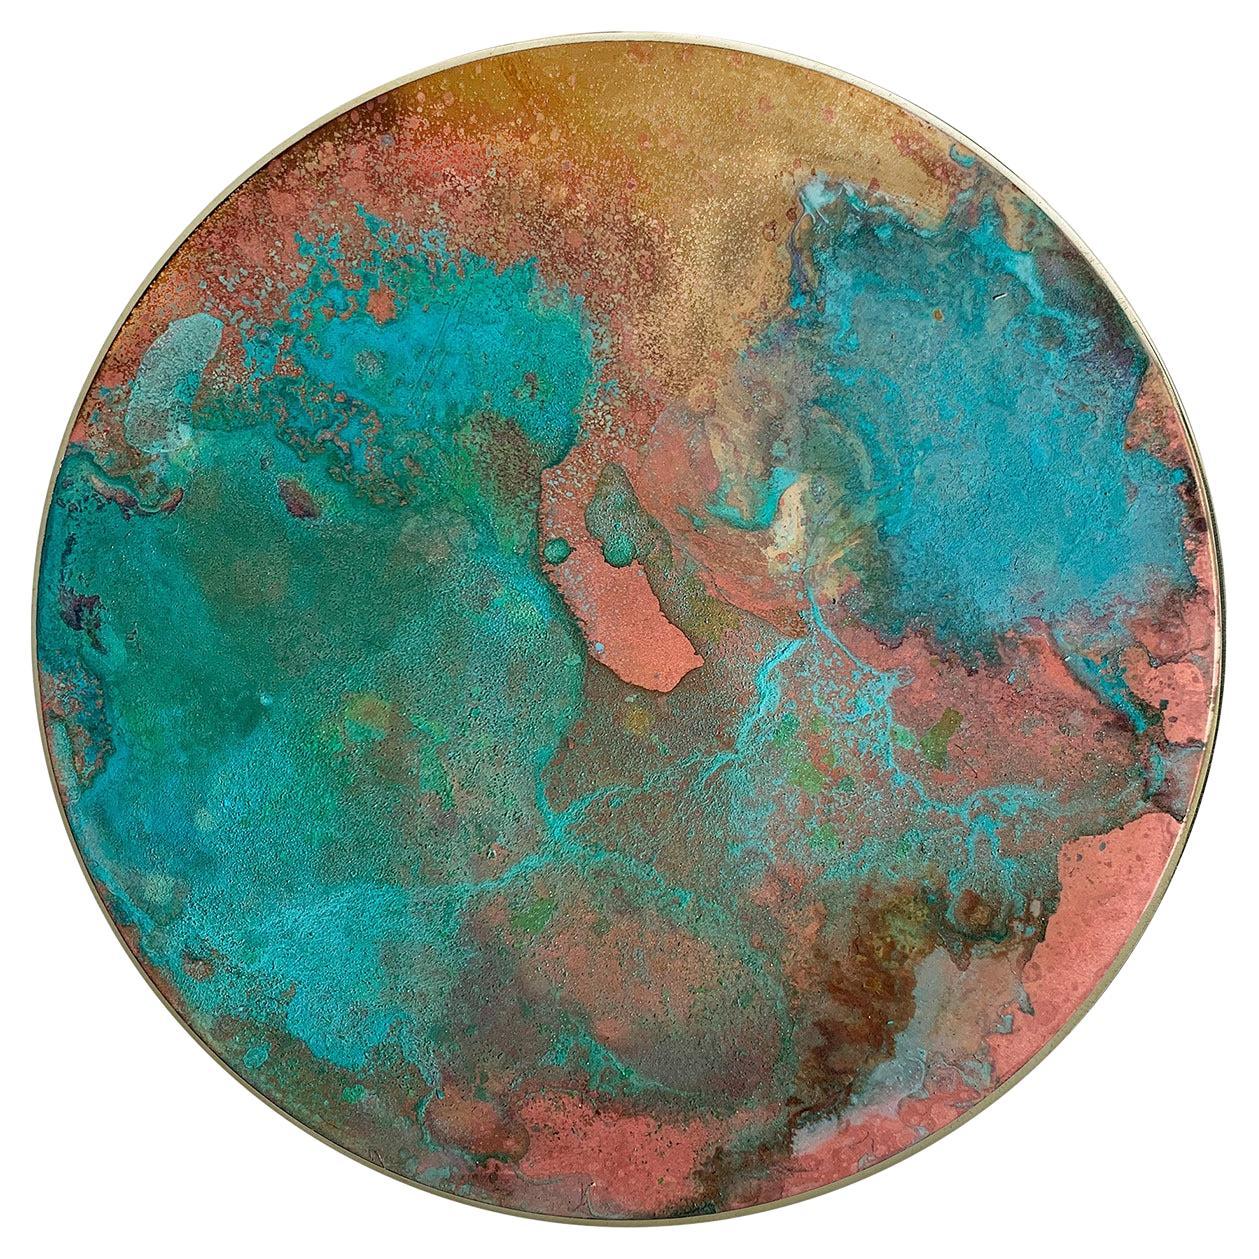 Aurora Decorative Disk #7